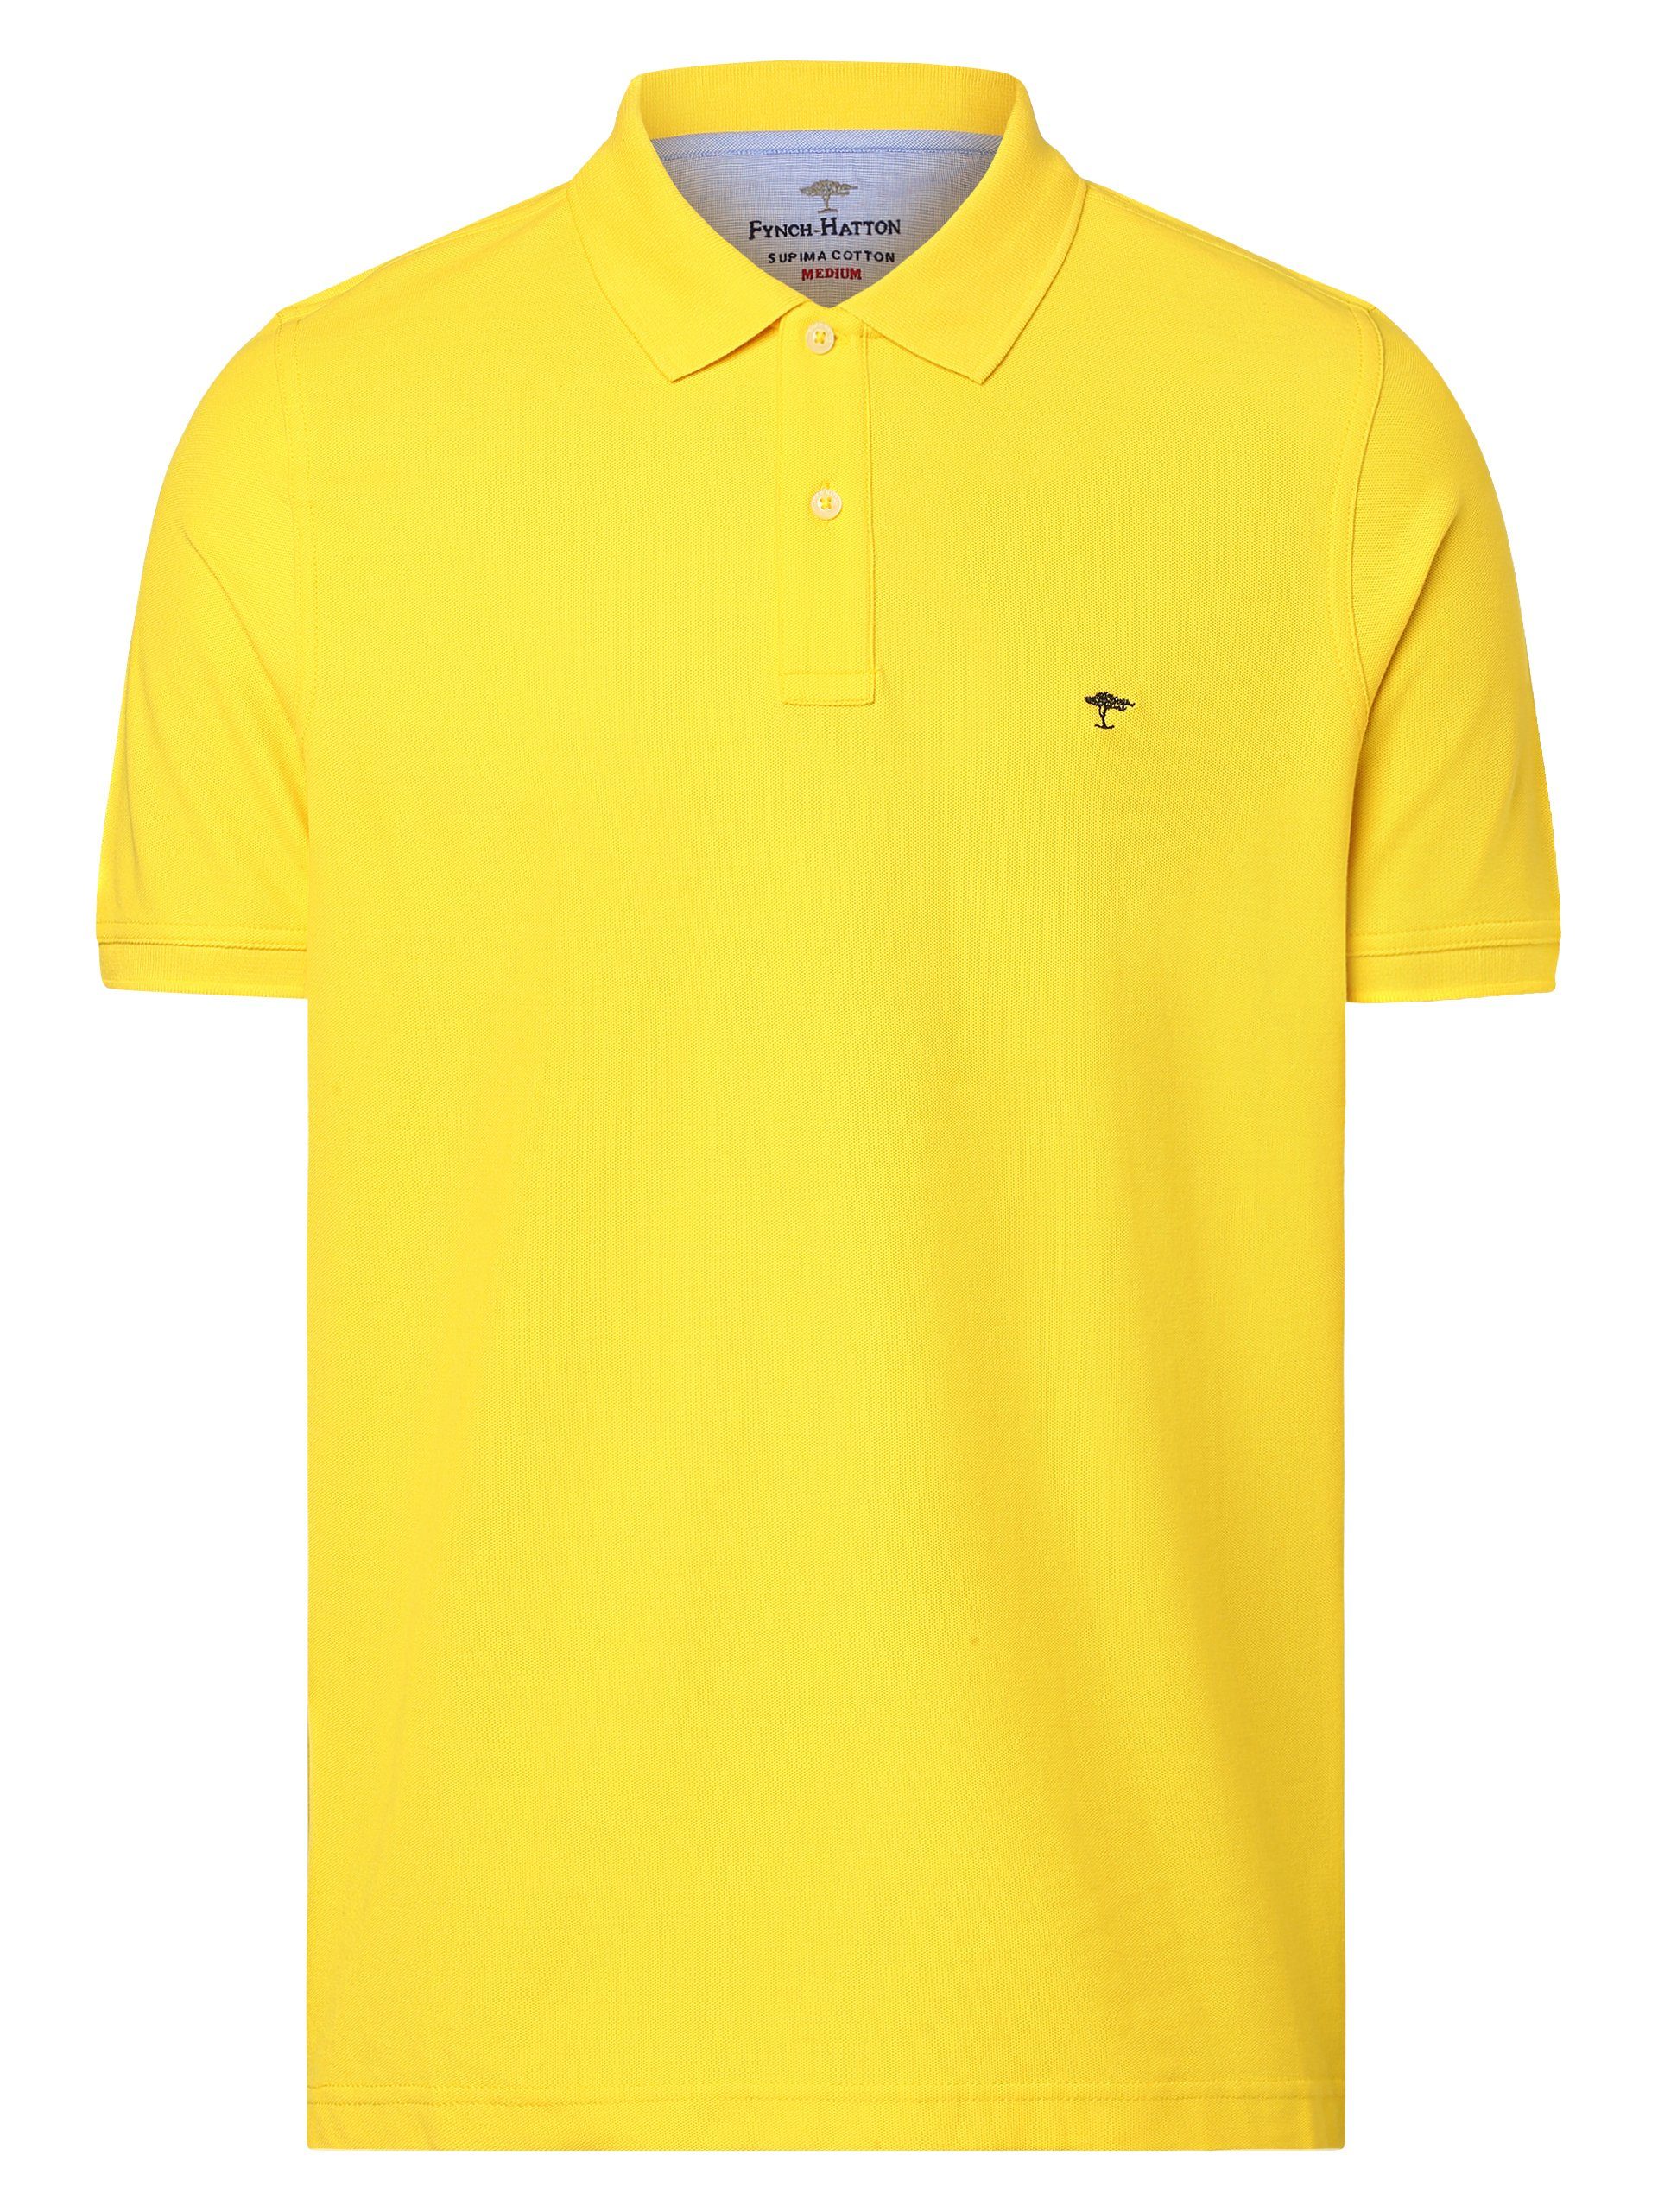 FYNCH-HATTON Poloshirt gelb